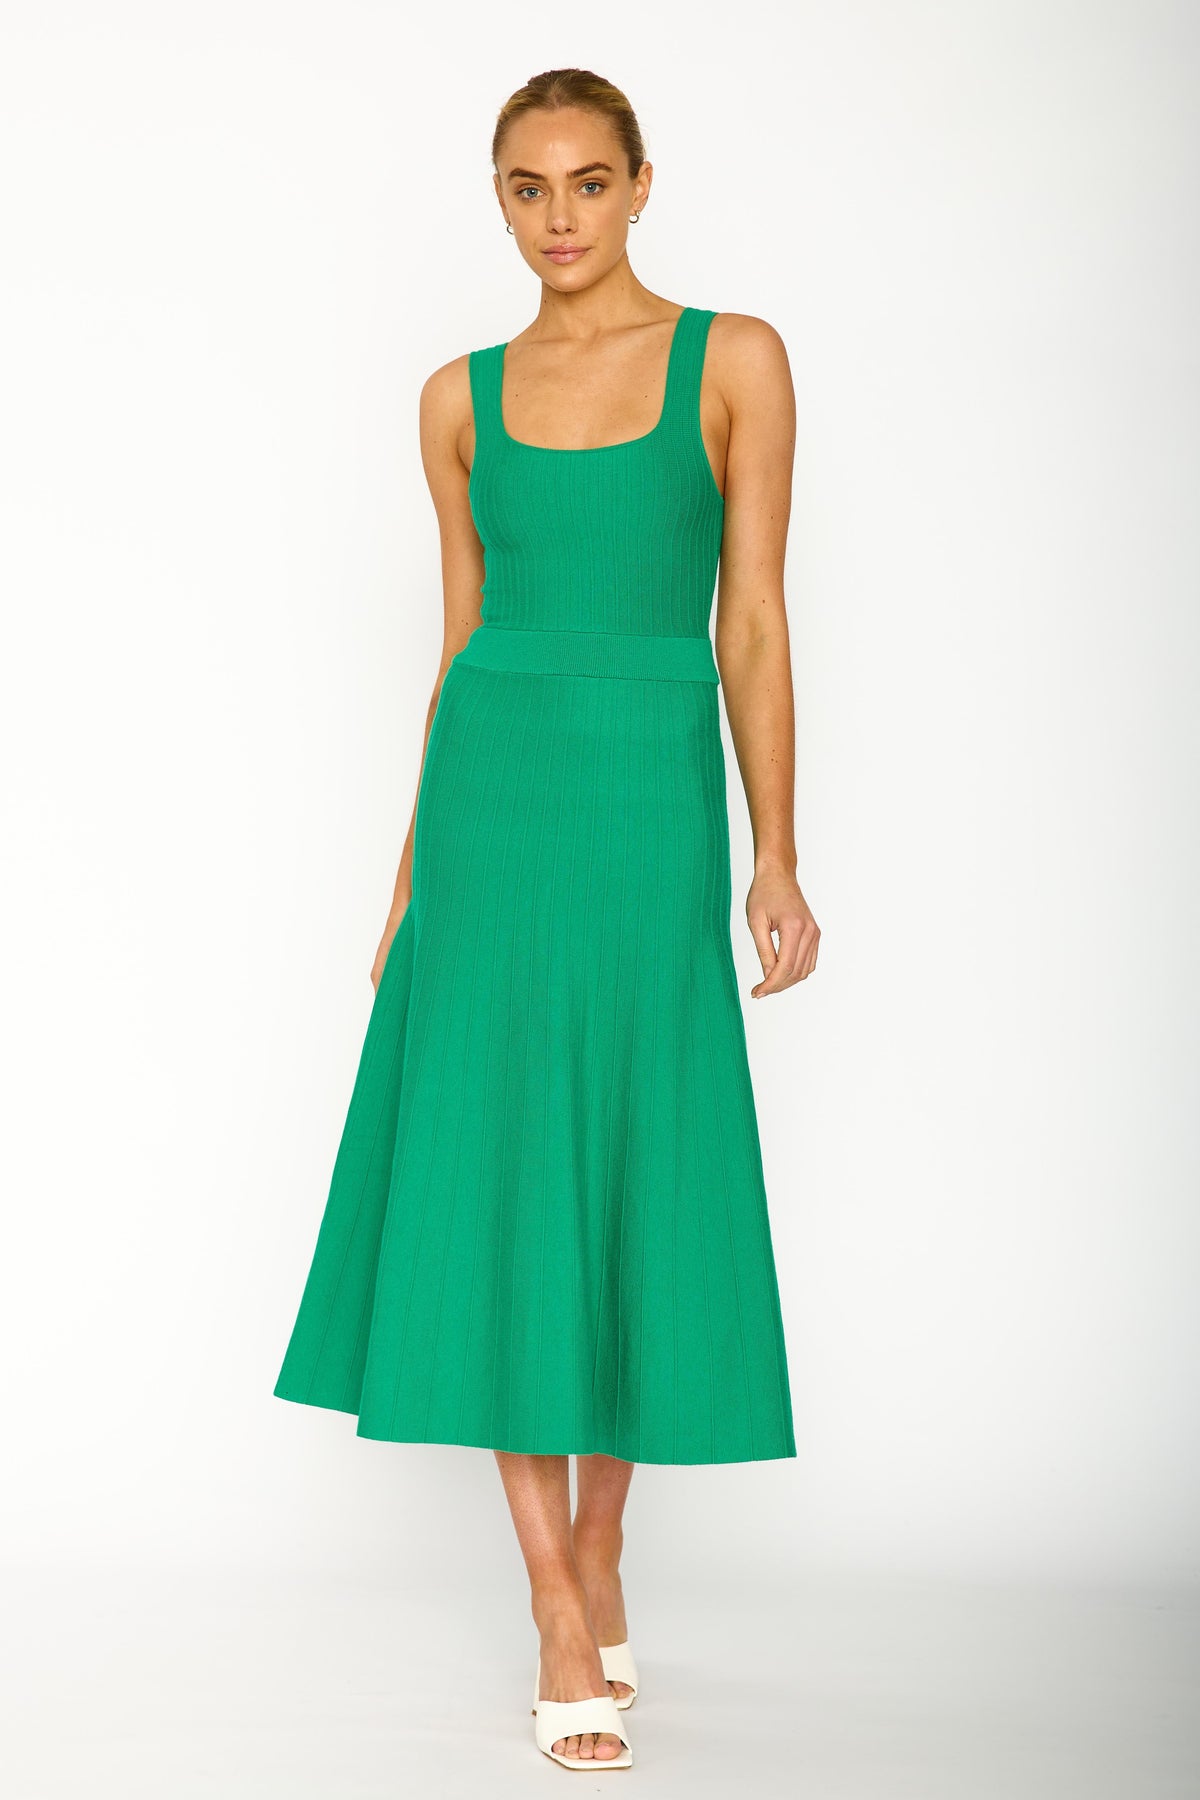 Sophia Knit Dress - Emerald